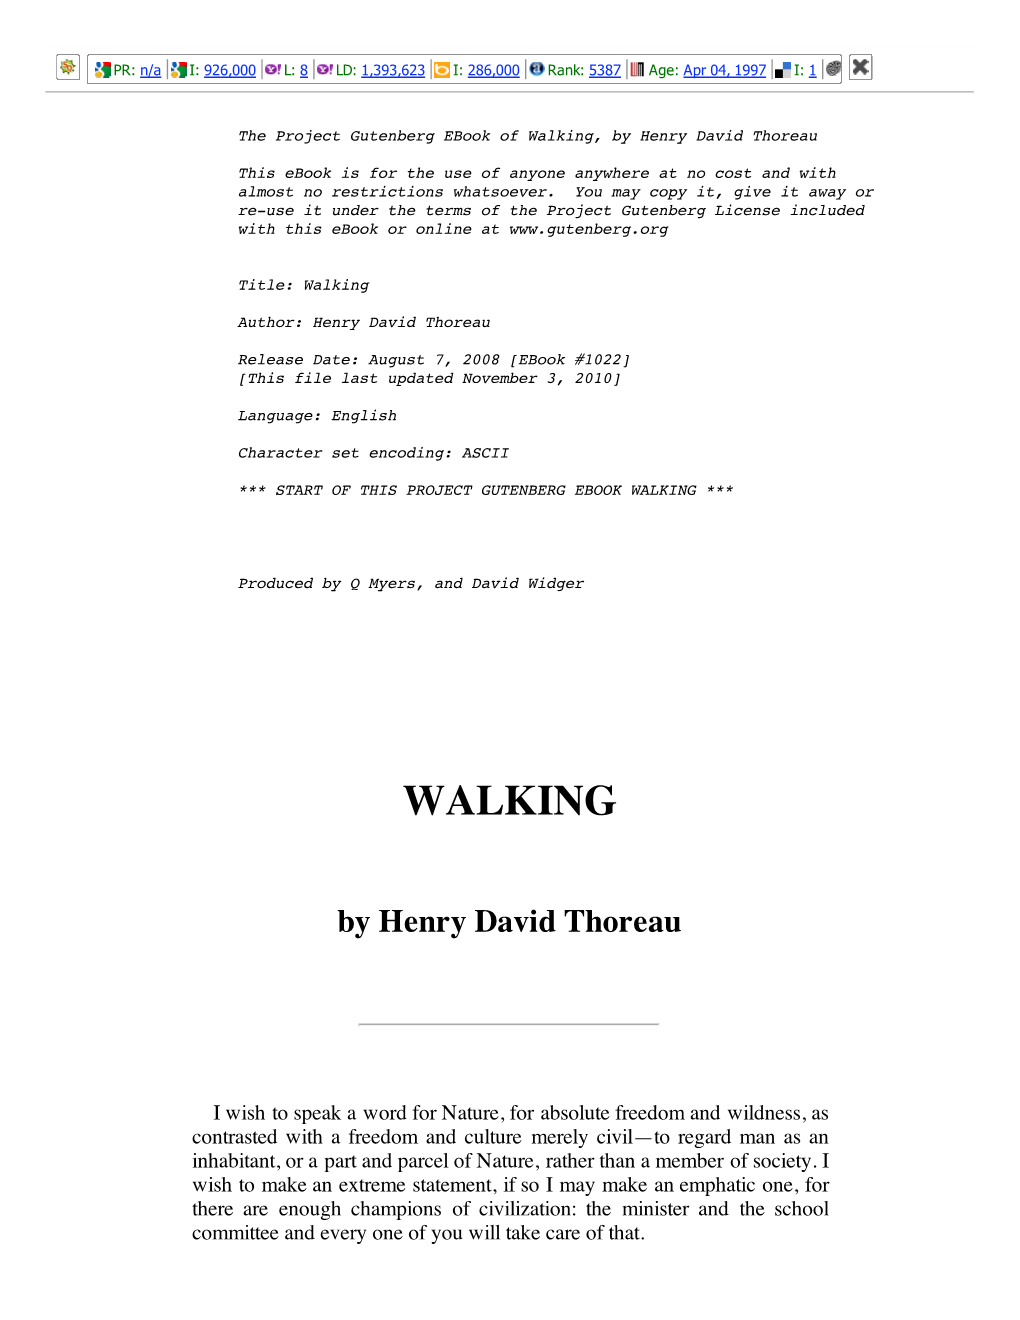 Walking, by Henry David Thoreau